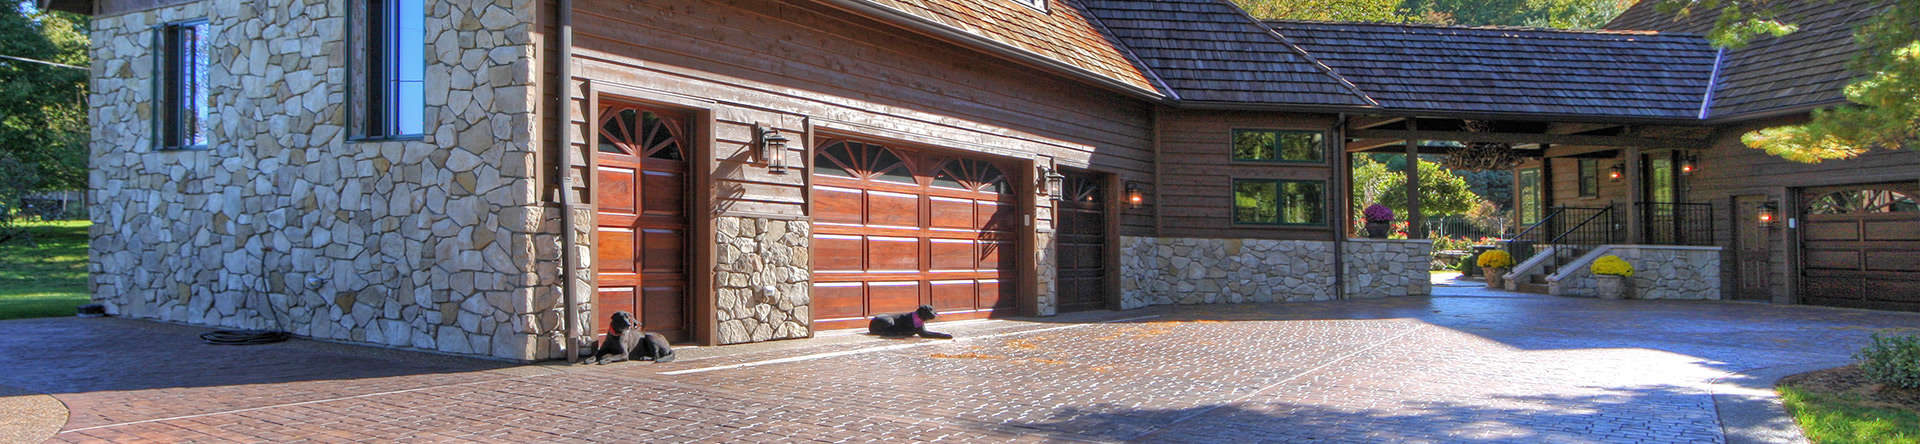 exteriors-garage-driveway